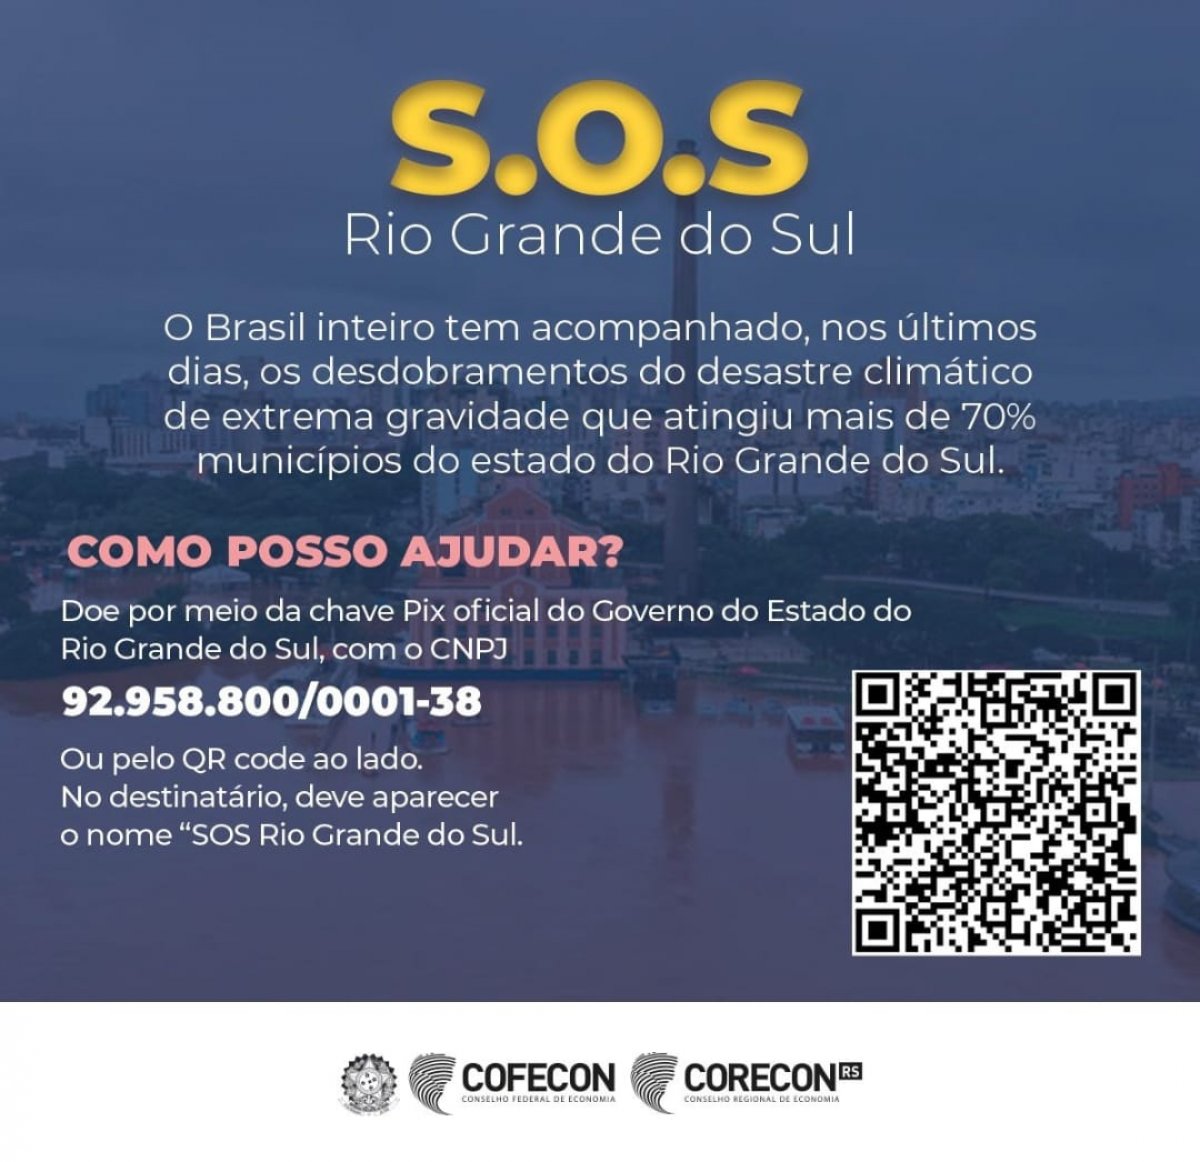 Corecon-SC apoia campanha de doações ao Rio Grande do Sul - Corecon/SC